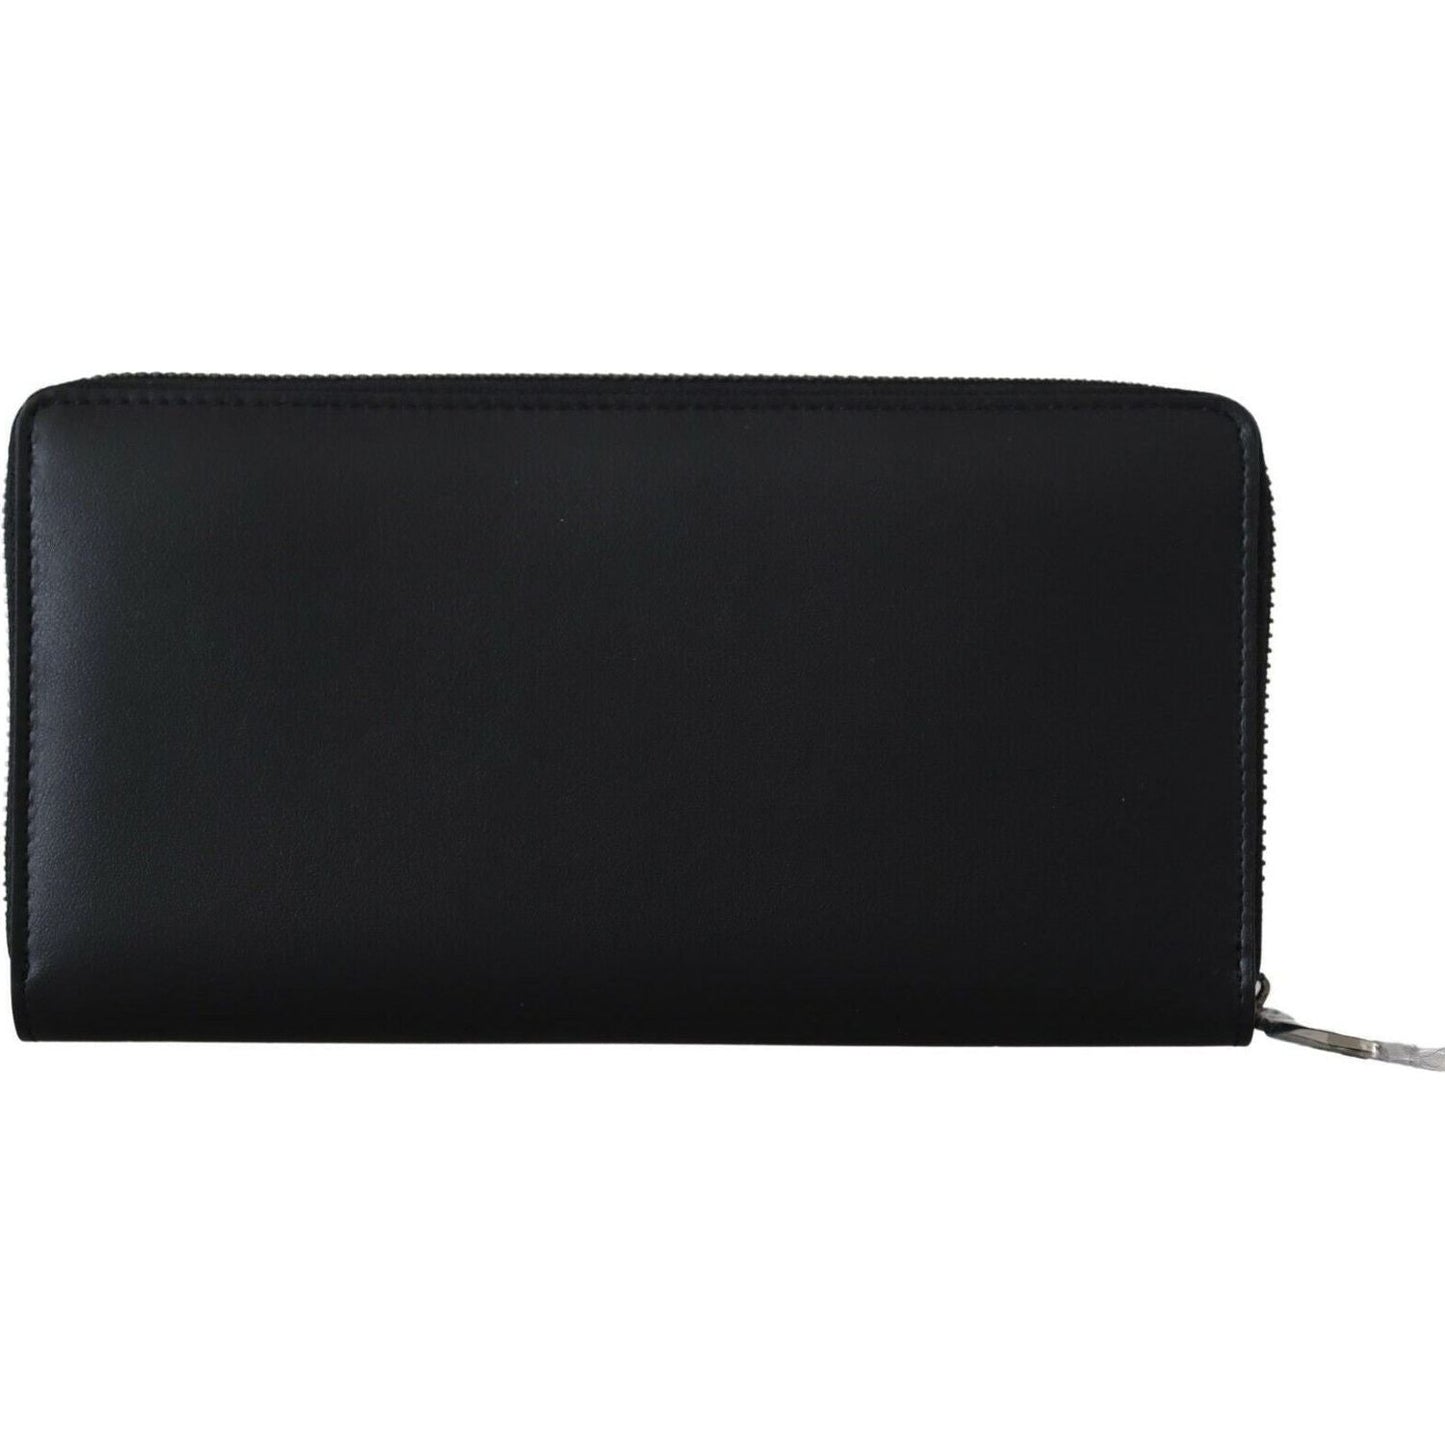 Dolce & Gabbana Elegant Textured Leather Continental Wallet black-zip-around-continental-clutch-exotic-leather-wallet